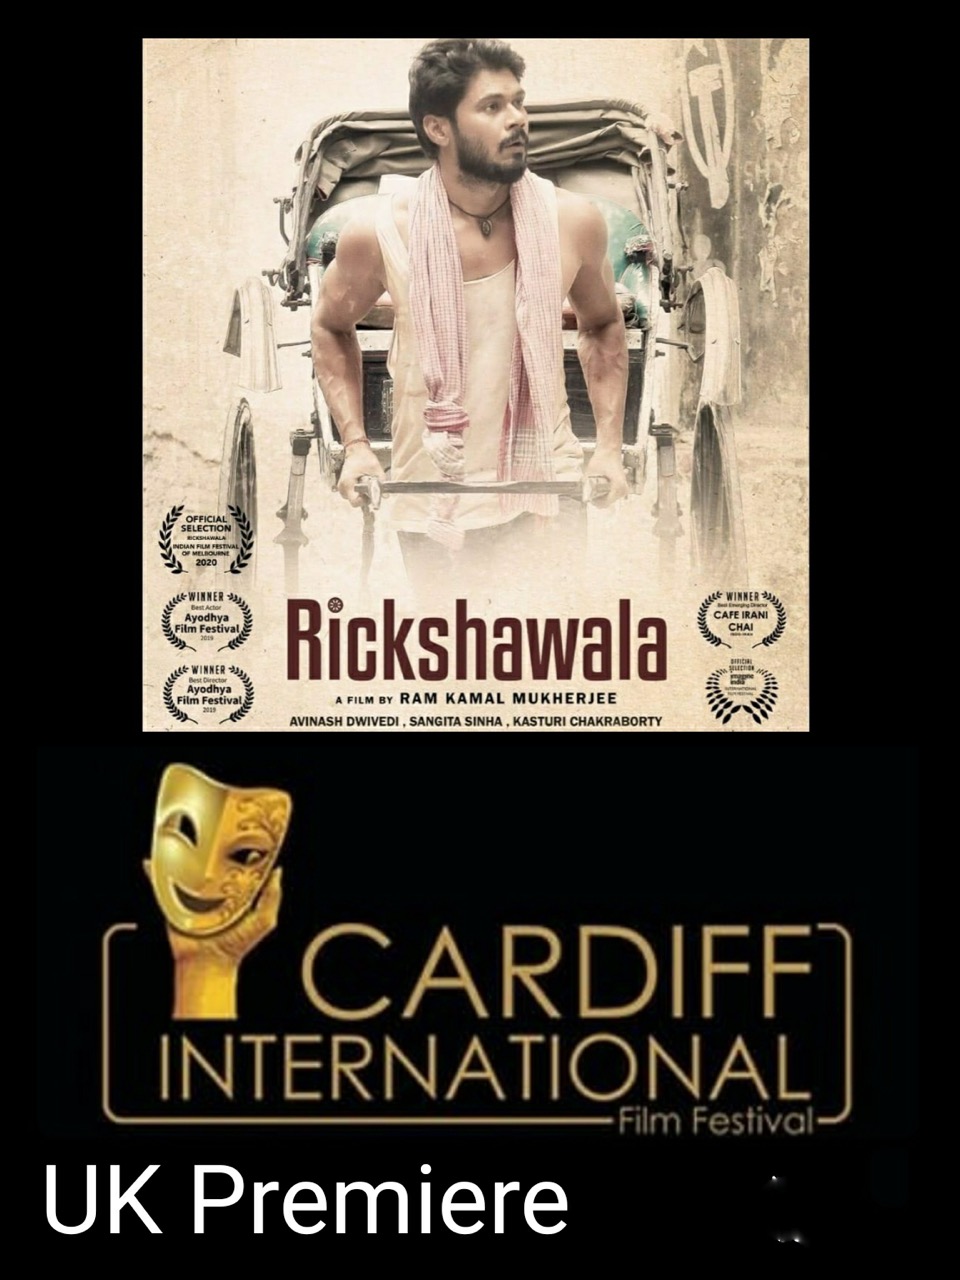 Cardiff Calling: Rickshawala travels to UK!